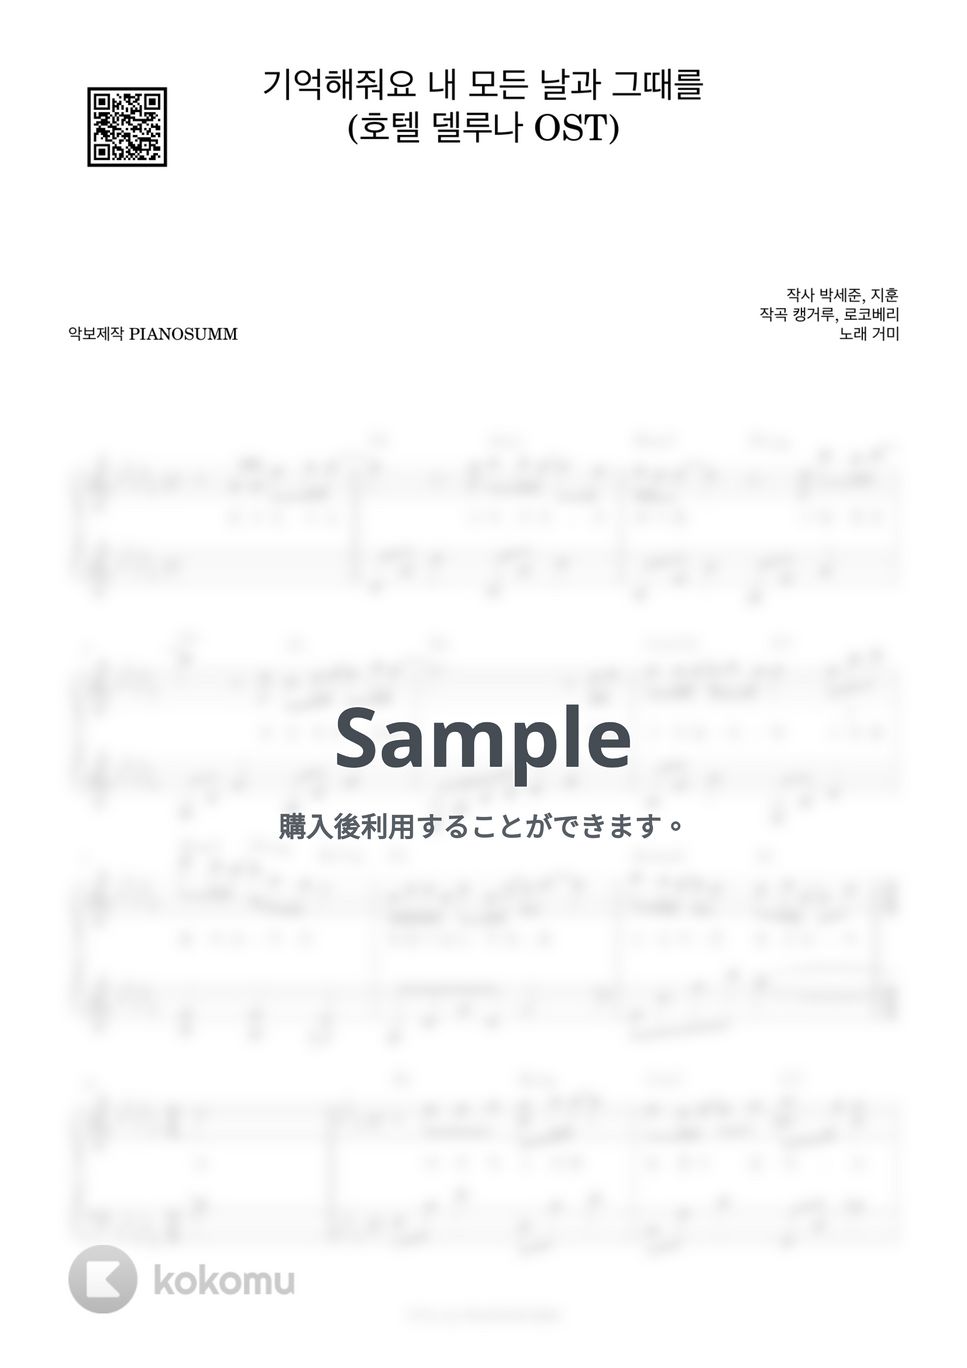 Gummy - Remember Me (ホテルデルーナ OST) by PIANOSUMM